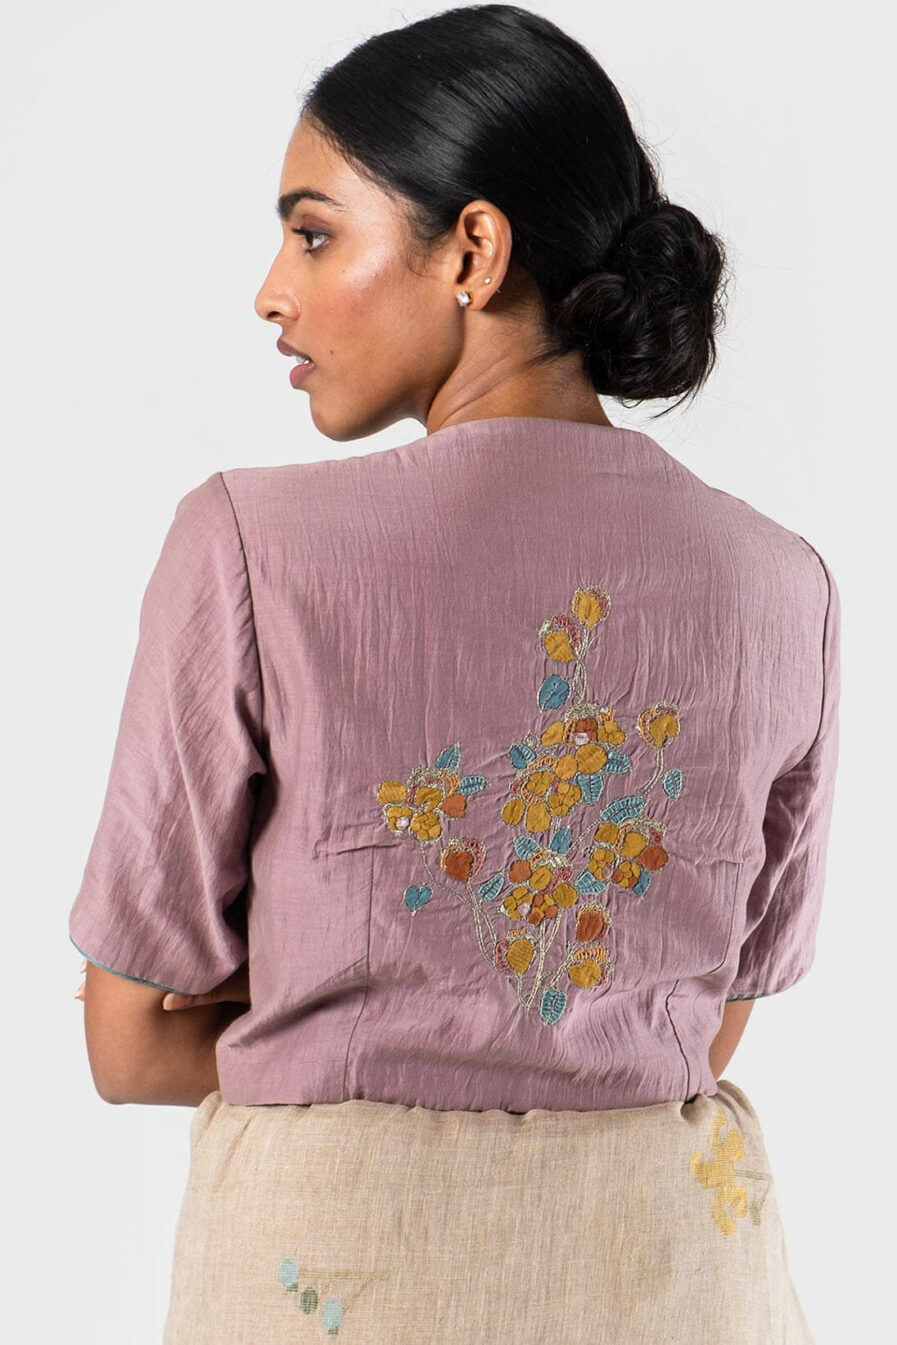 Anavila Lavender Festive floral khatwa blouse